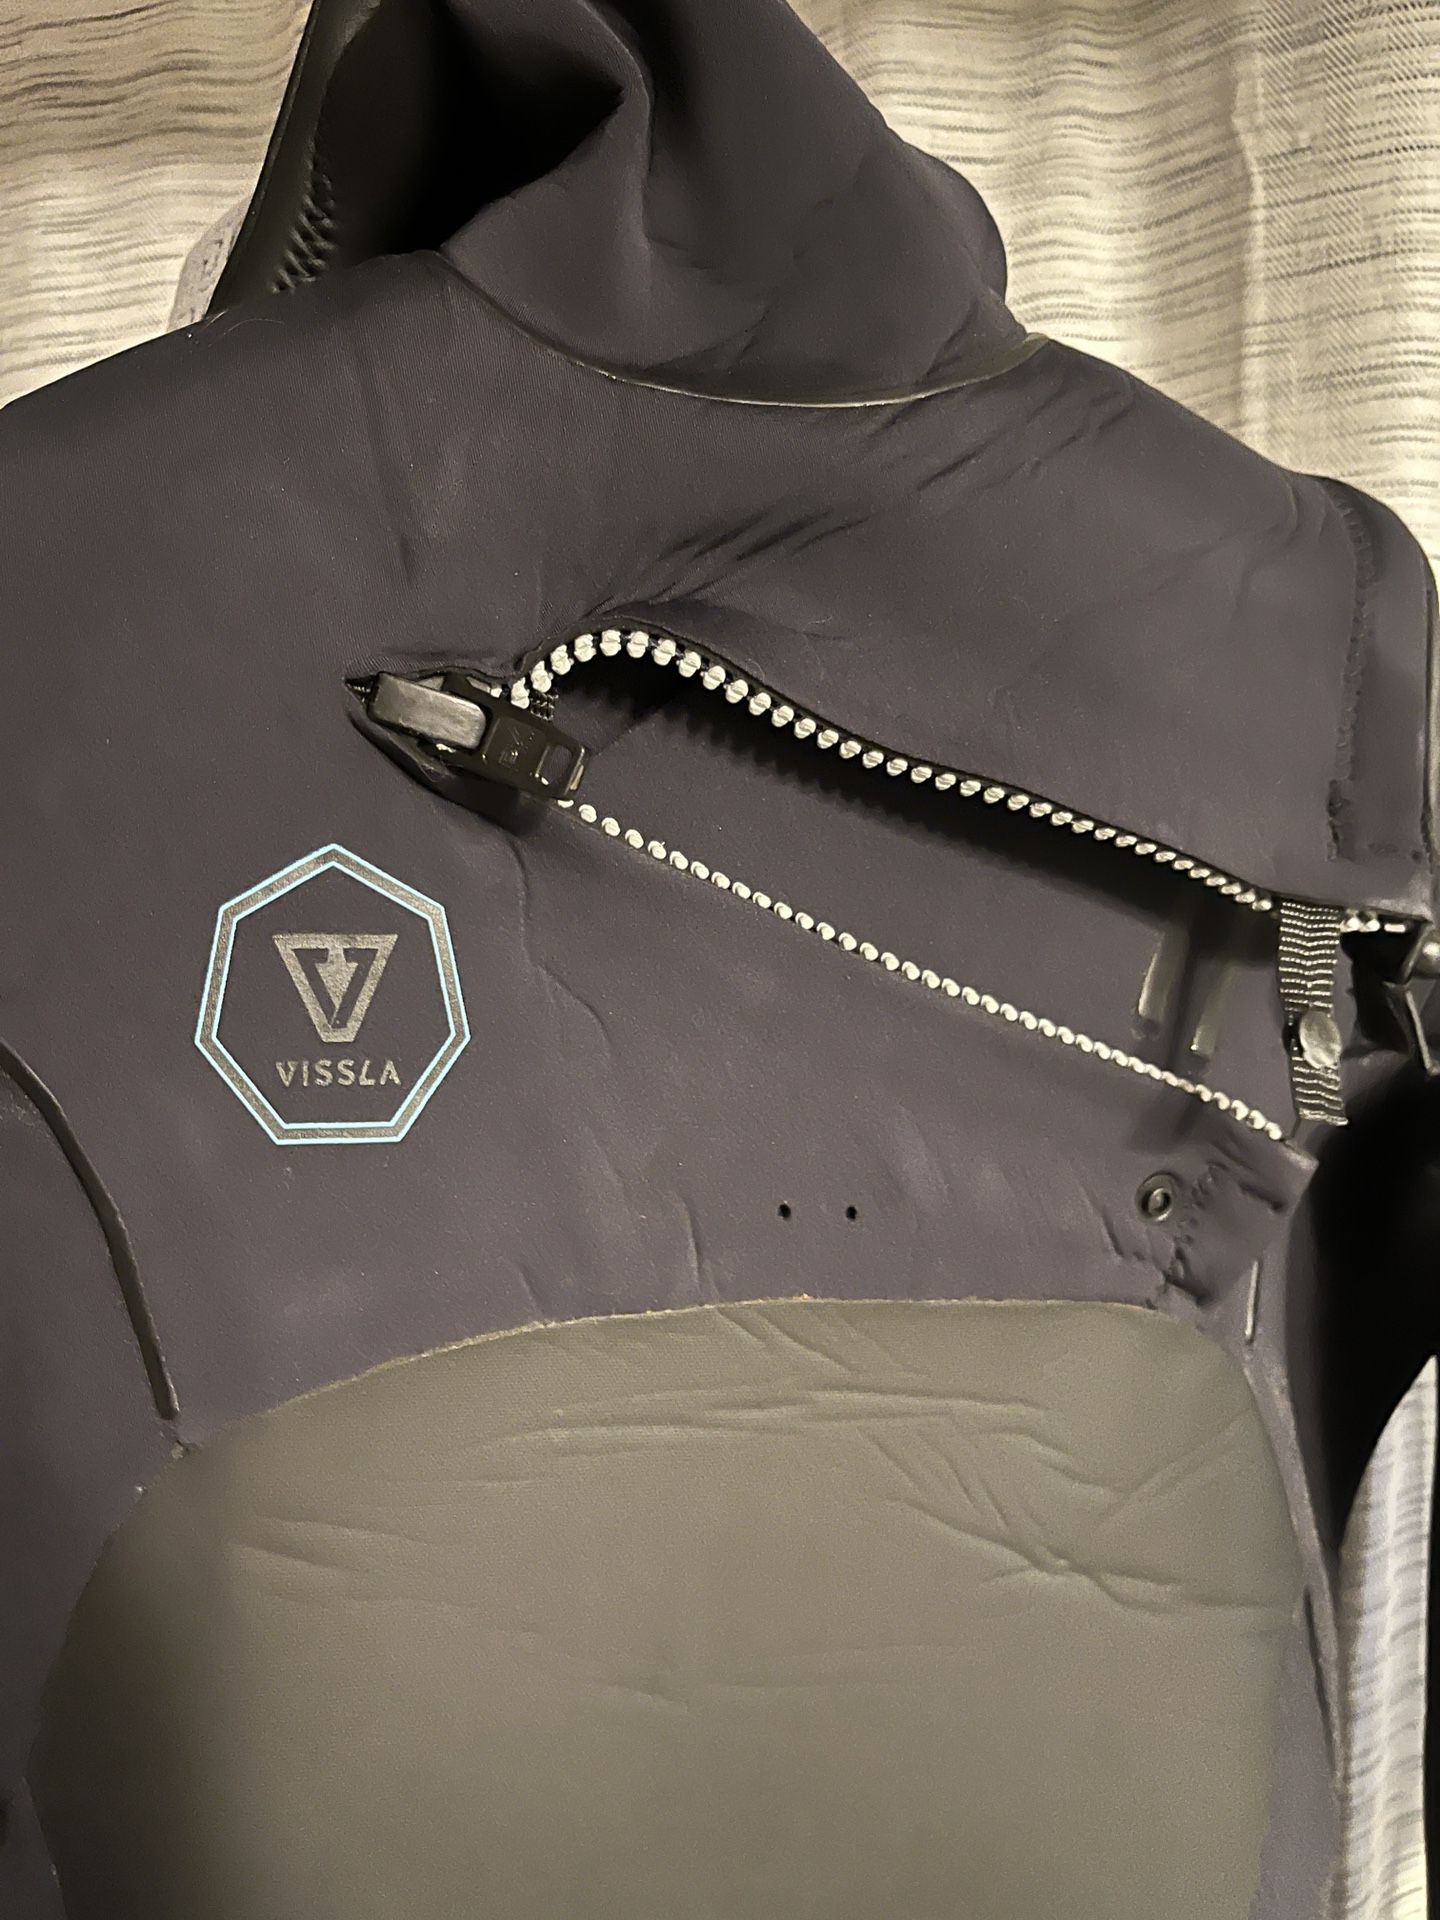 Vissla North Seas 4/3 Hooded Wetsuit (M/T)